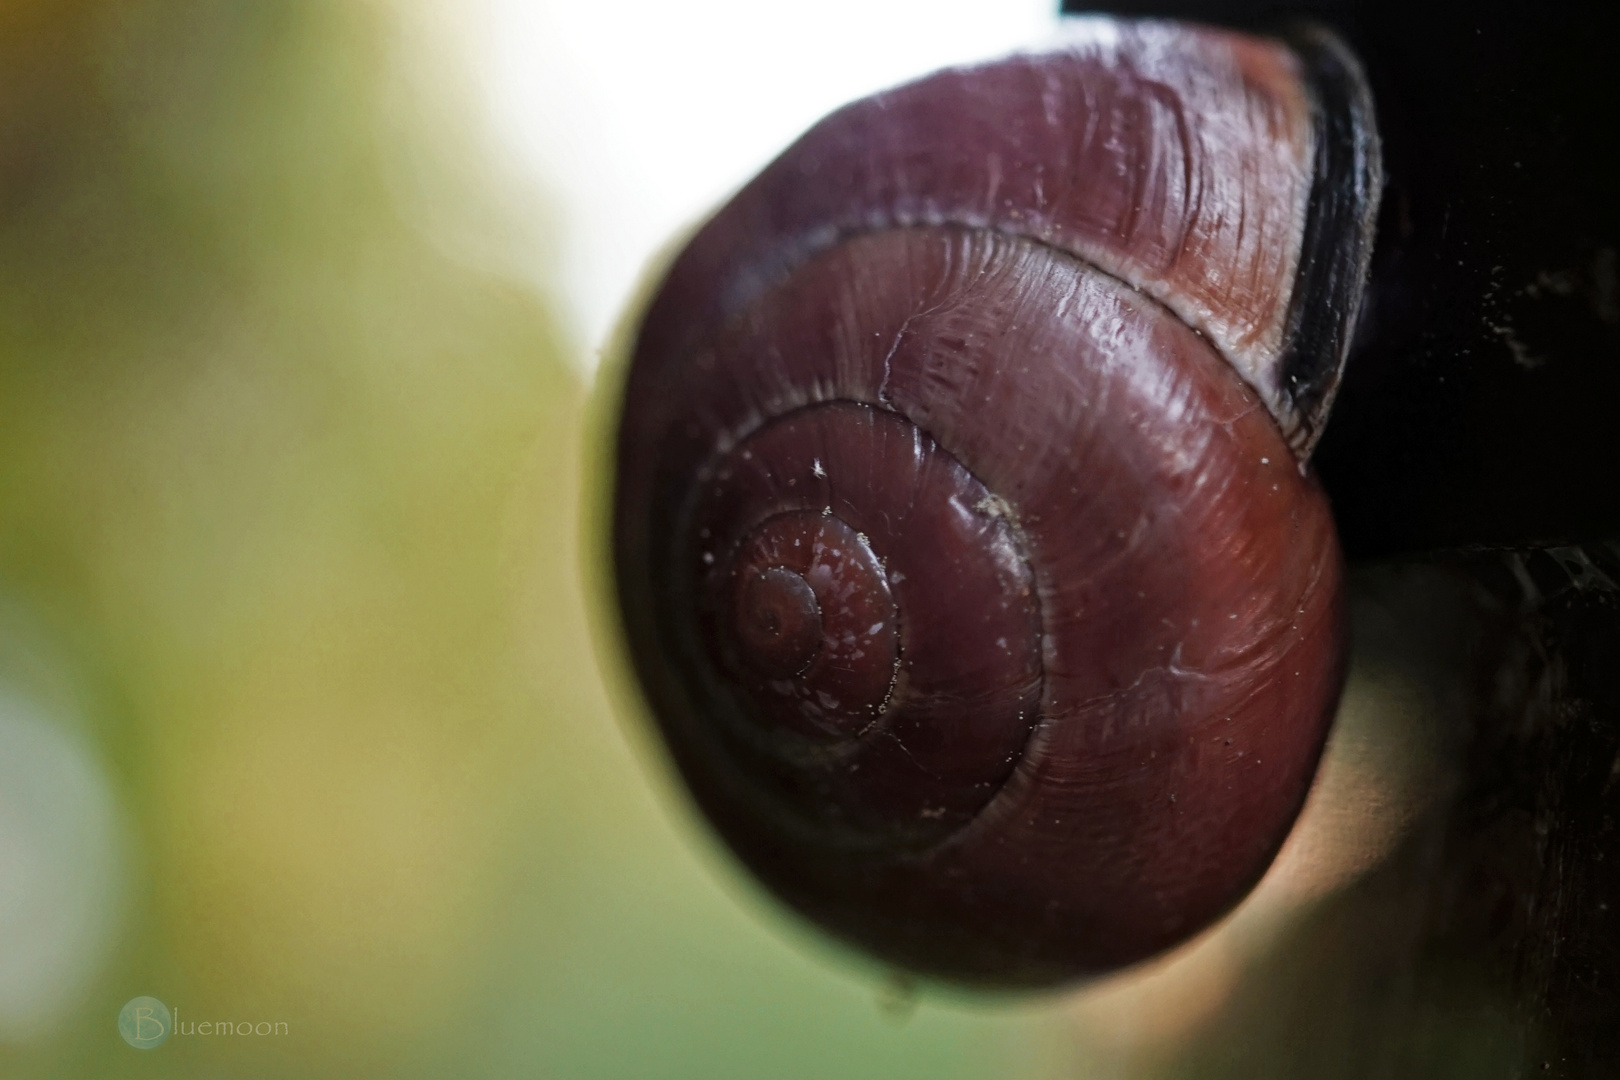 Just a snail 